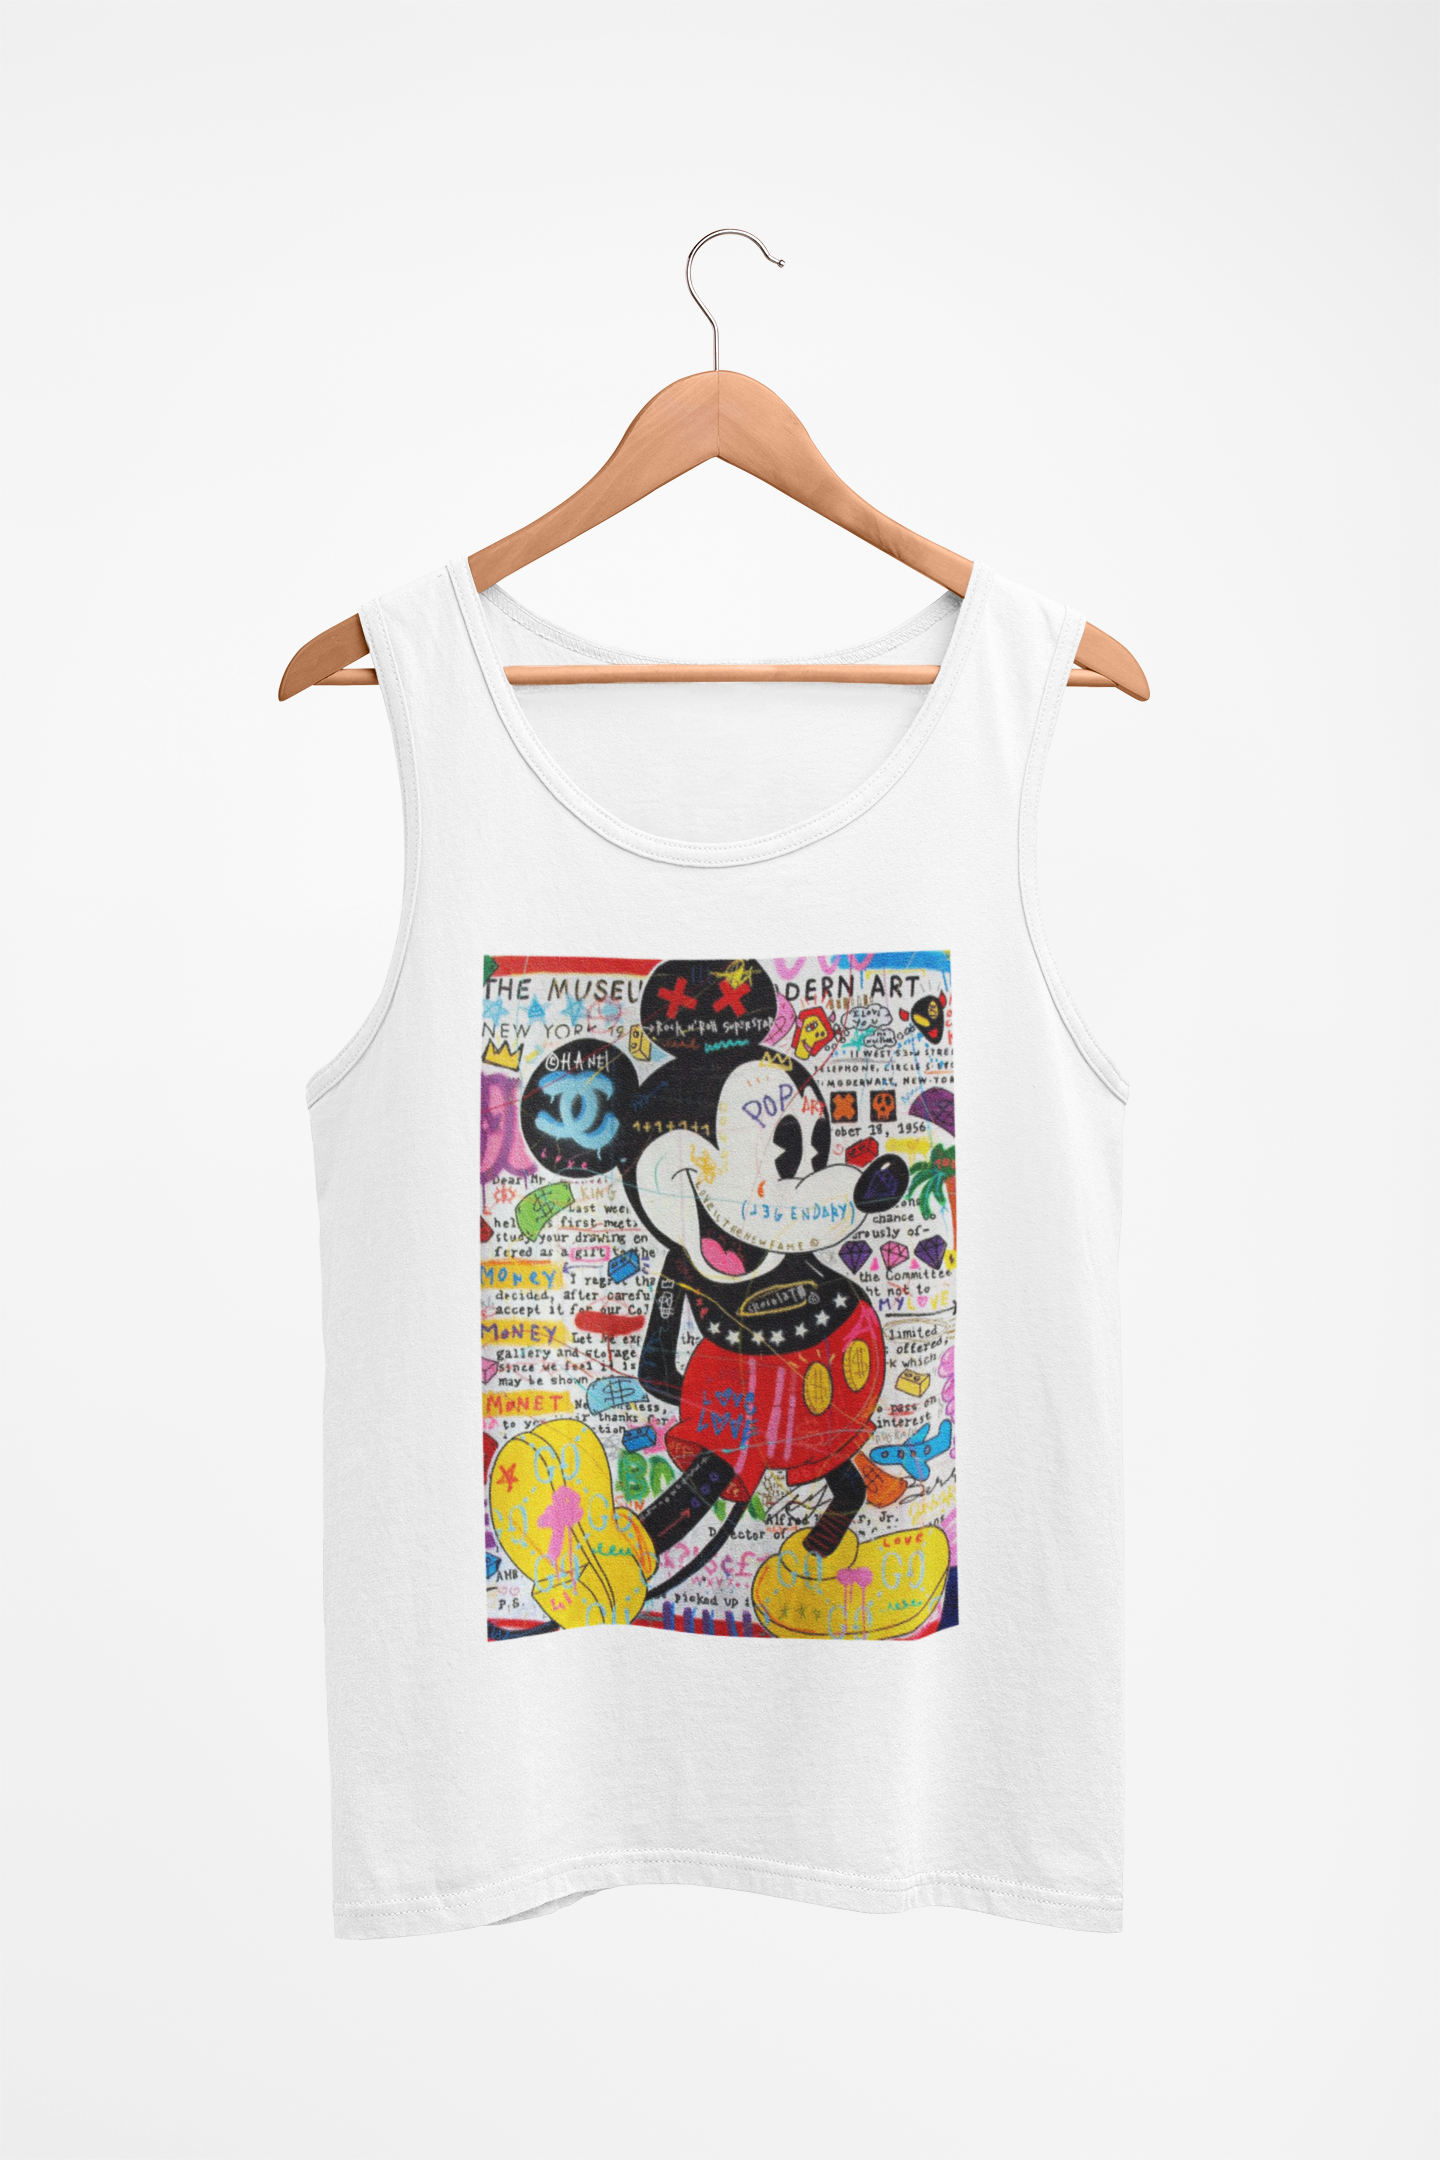 Mickey Mouse Pop Art